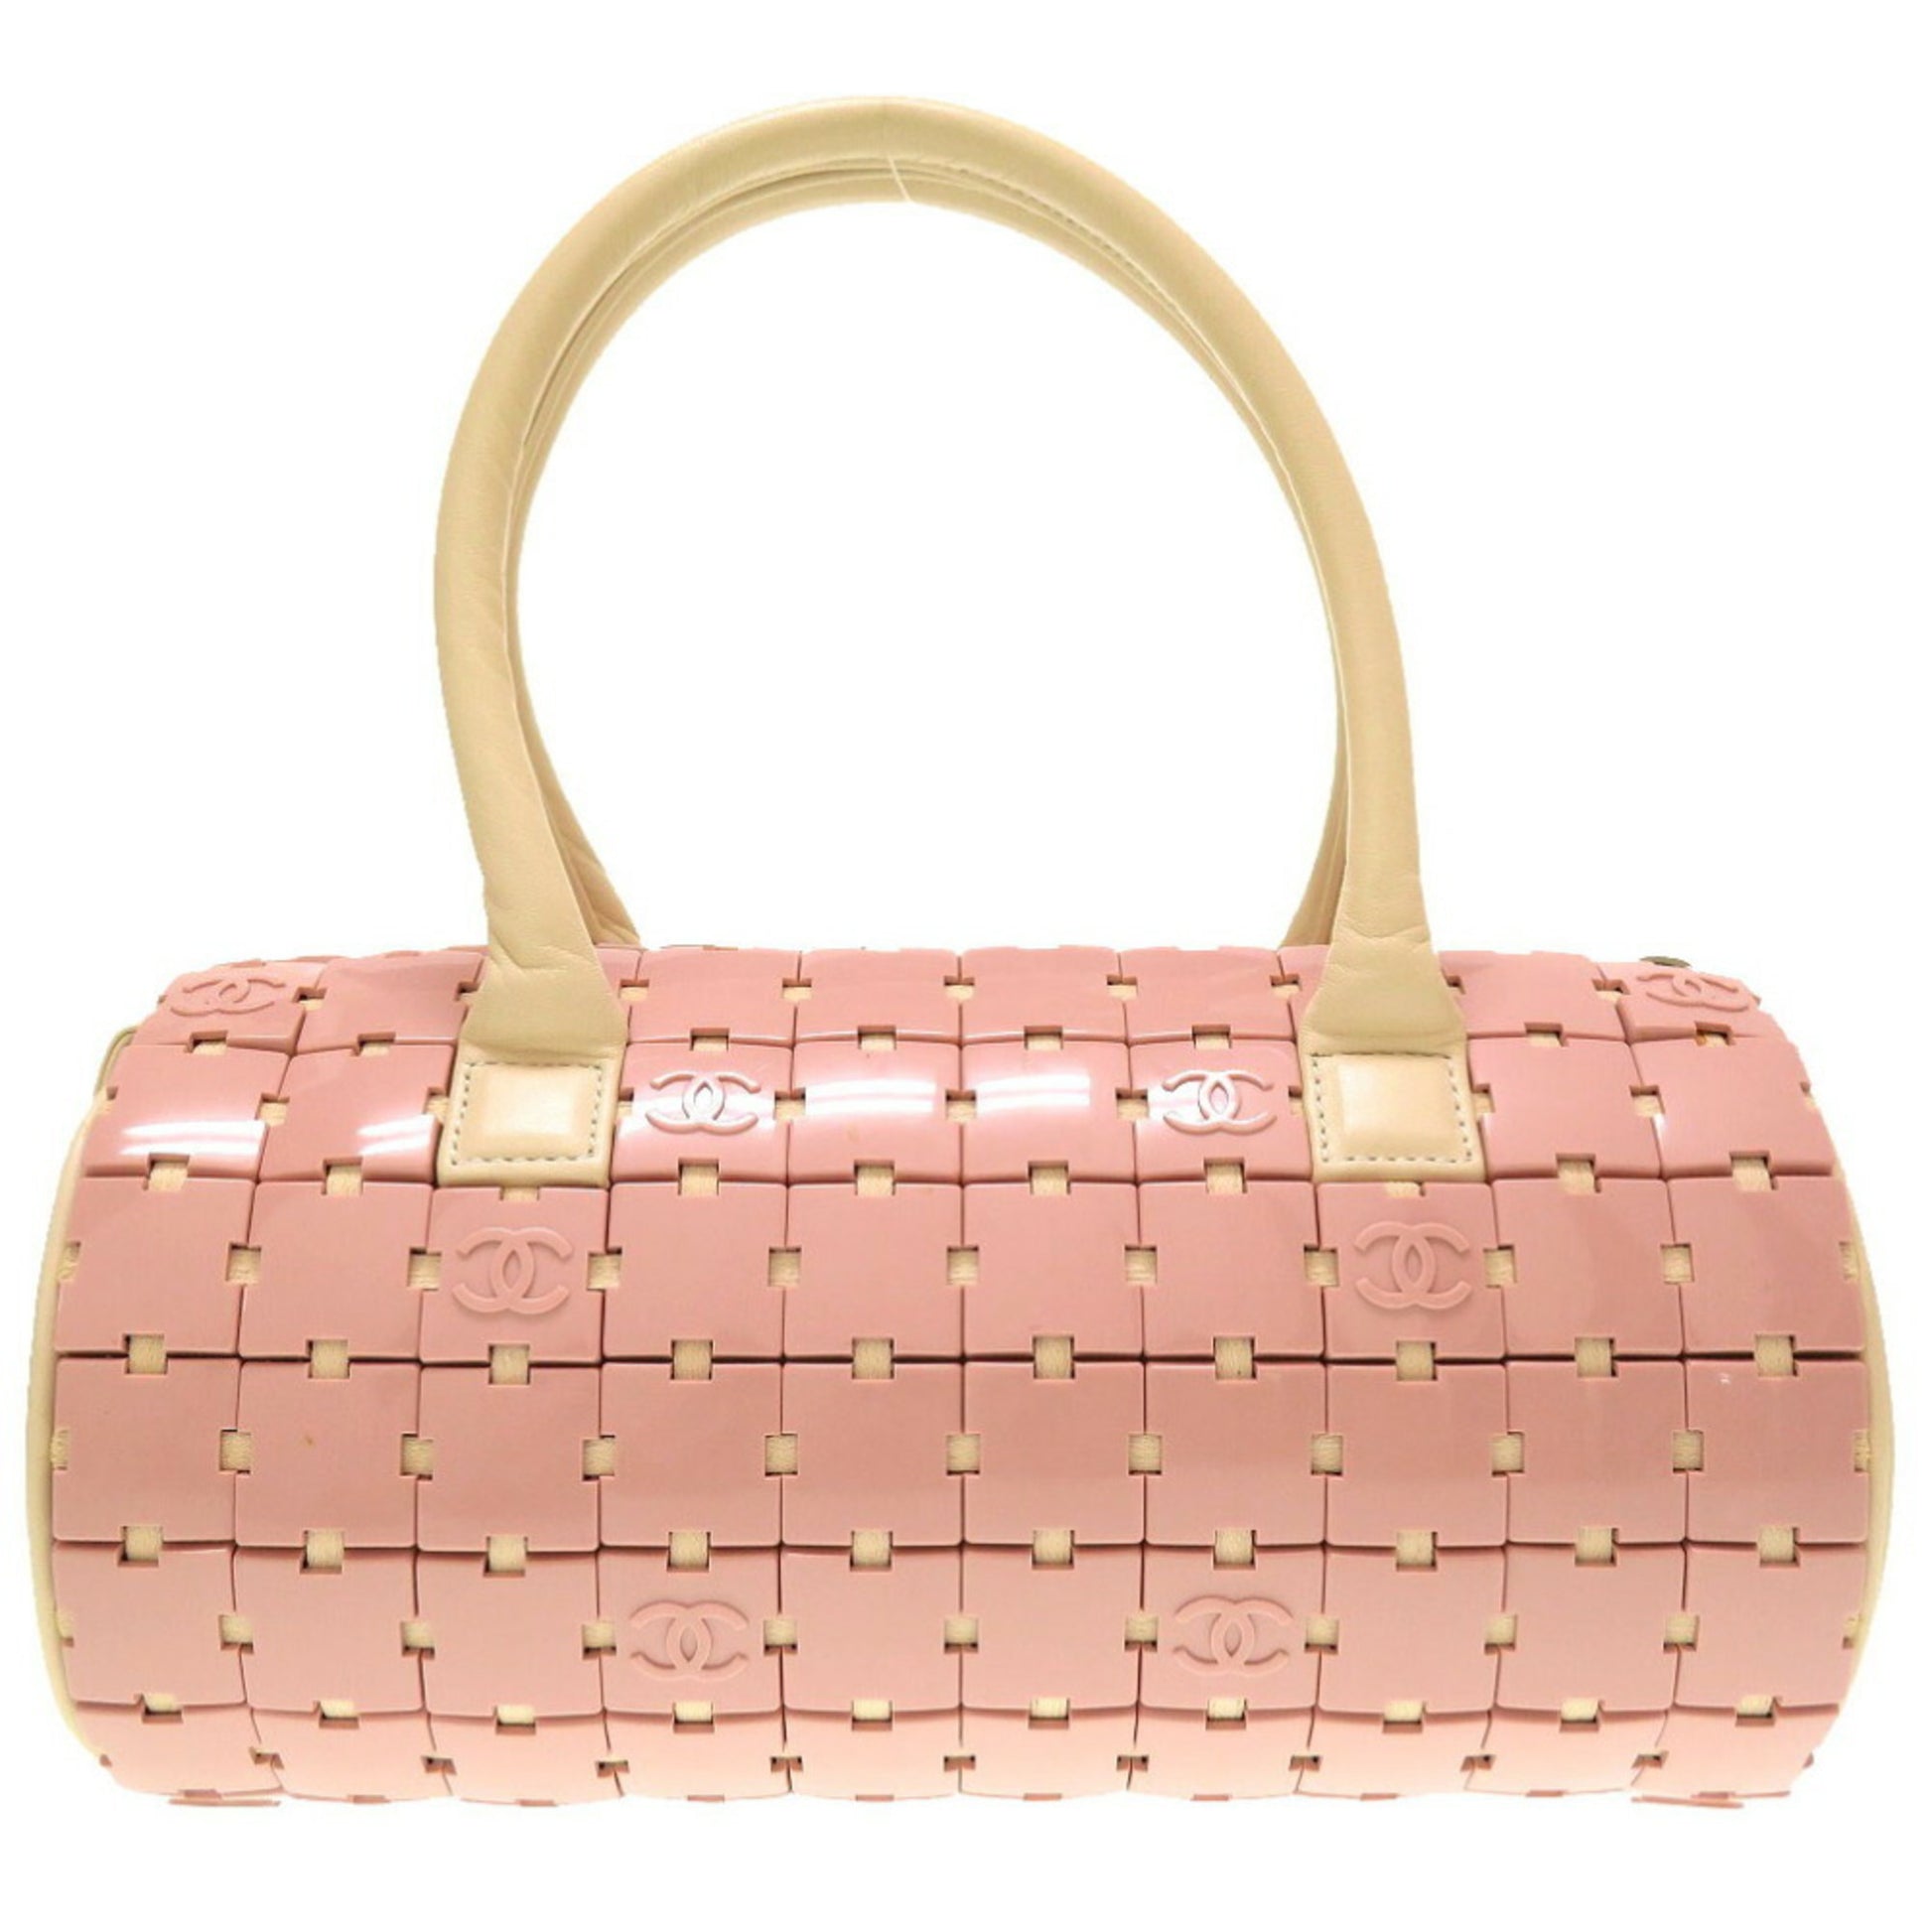 CHANEL Duffle Bag Plastic Leather Pink White 6th Series Handbag